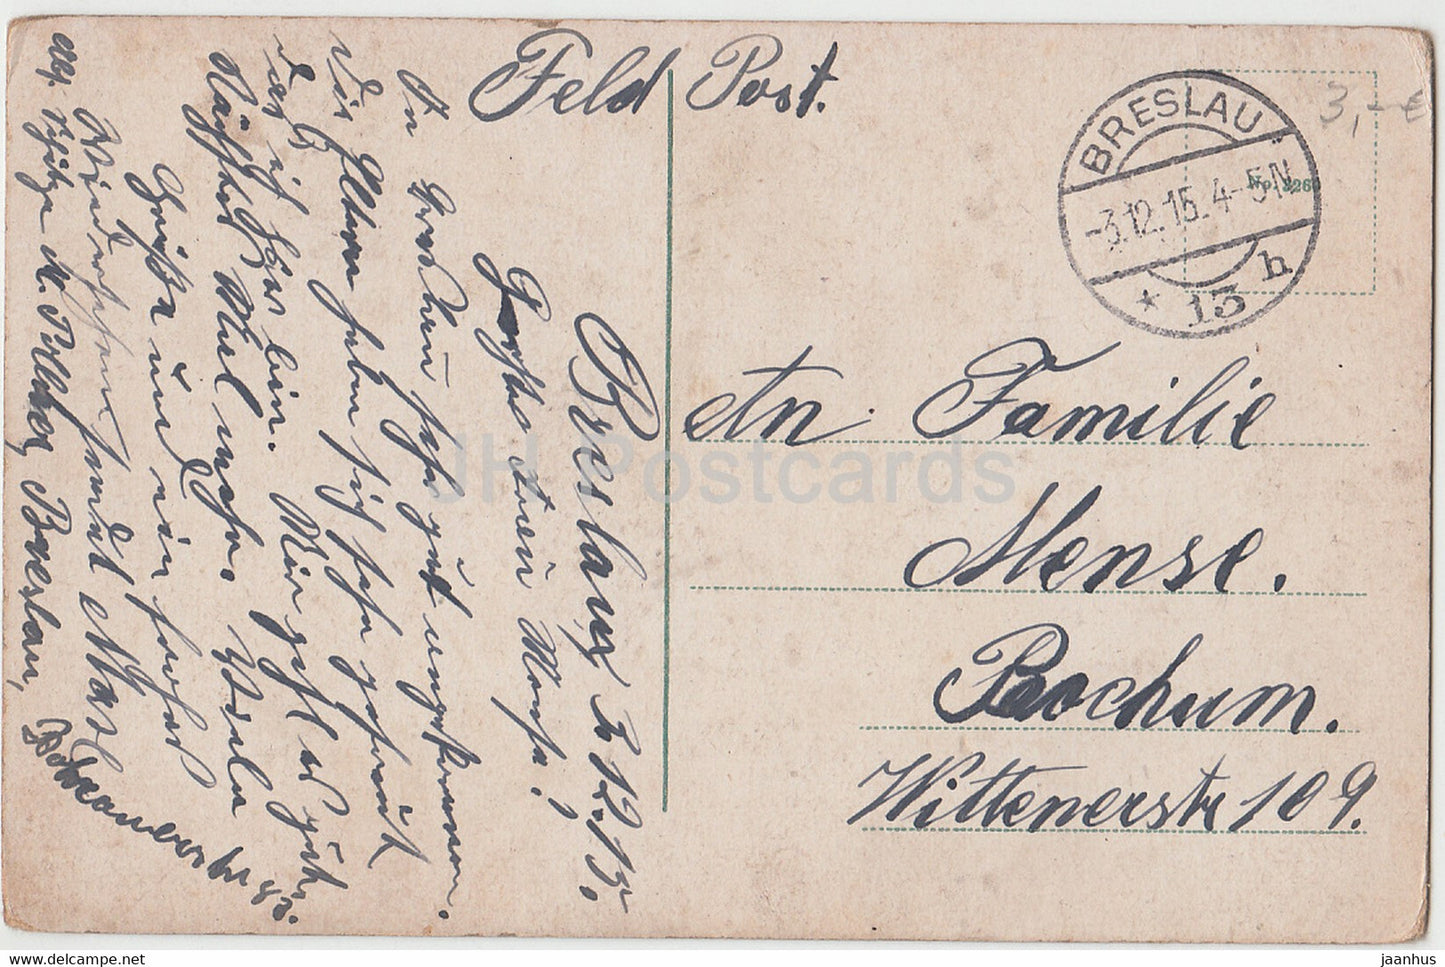 Breslau - Wroclaw - Kaiserbrucke - pont - Feldpost - carte postale ancienne - 1915 - Pologne - utilisé